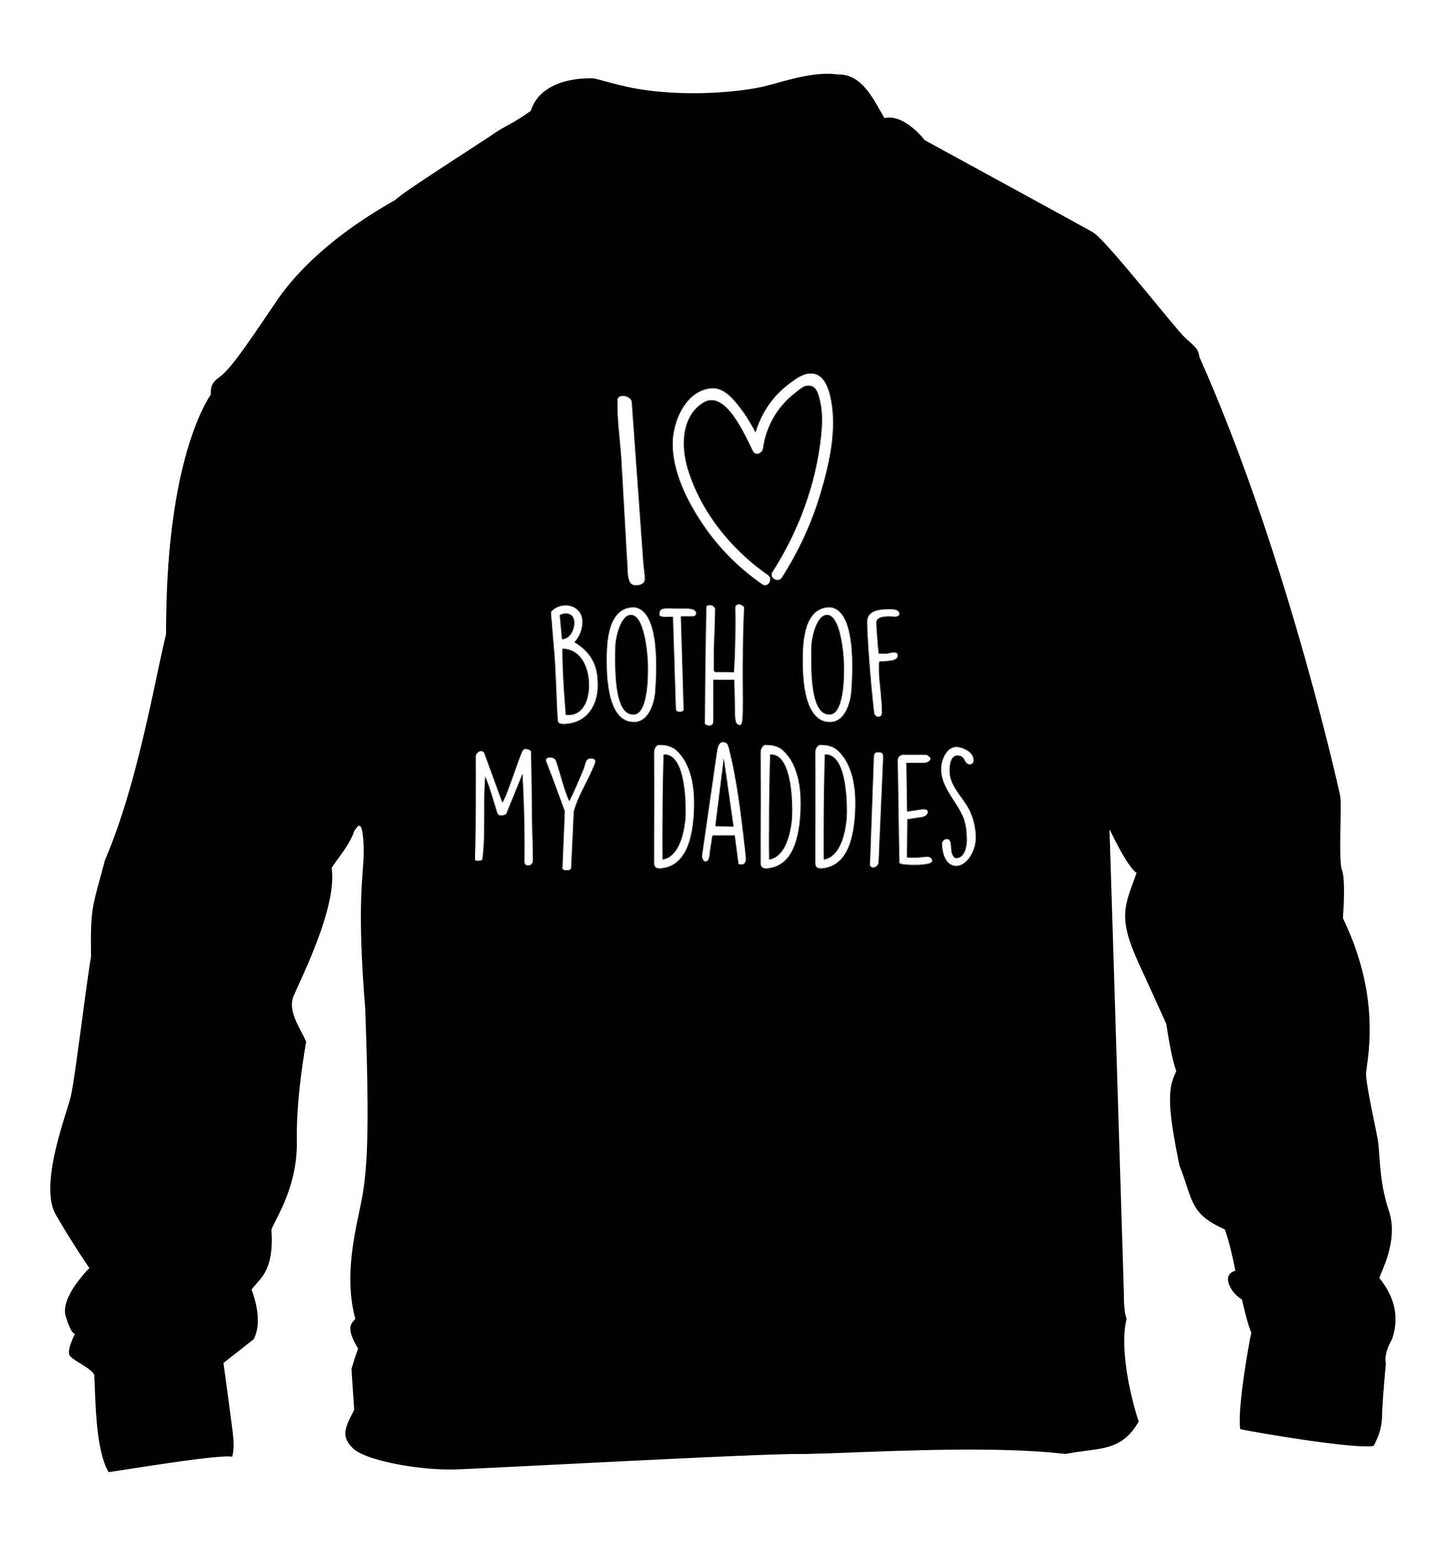 I love both of my daddies children's black sweater 12-13 Years